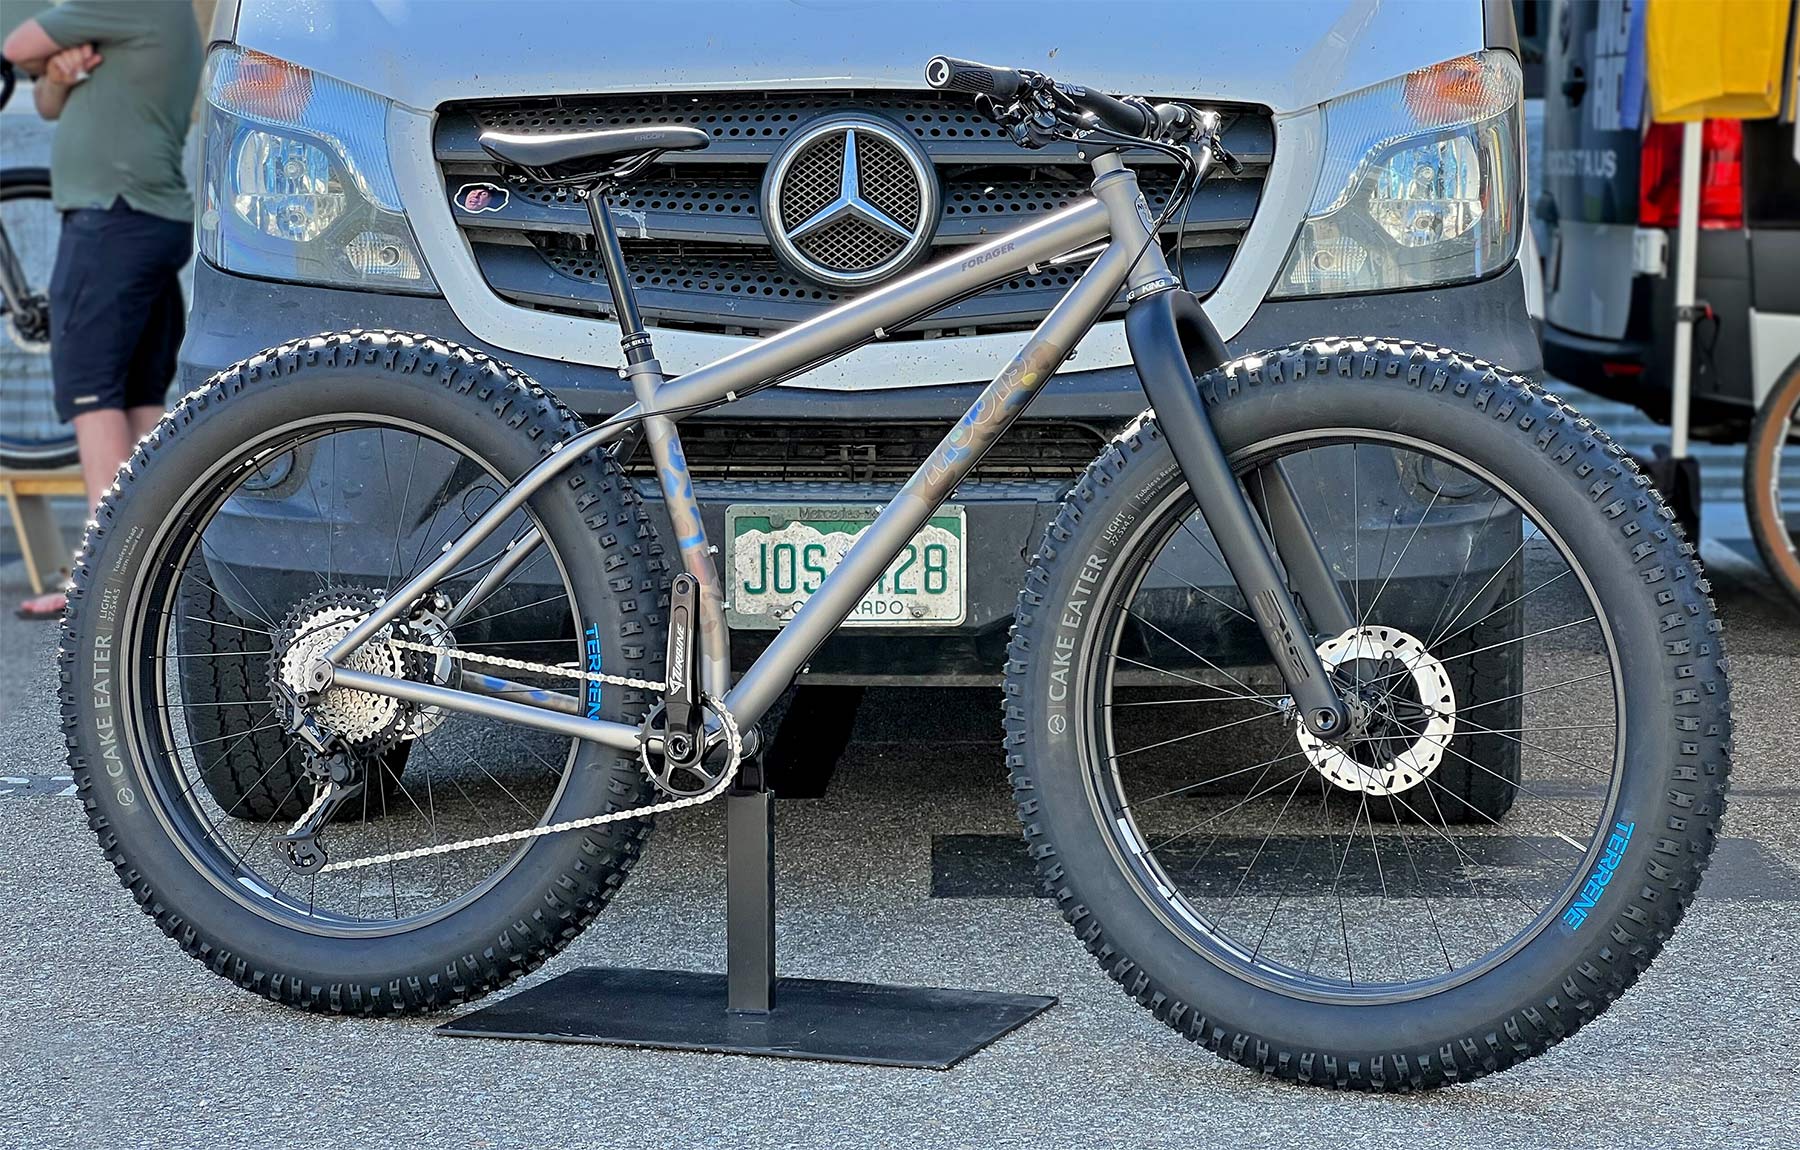 Moots Forager titanium fat bike sneak peek, huge 27.5x4.5" tire snow bike, complete bike